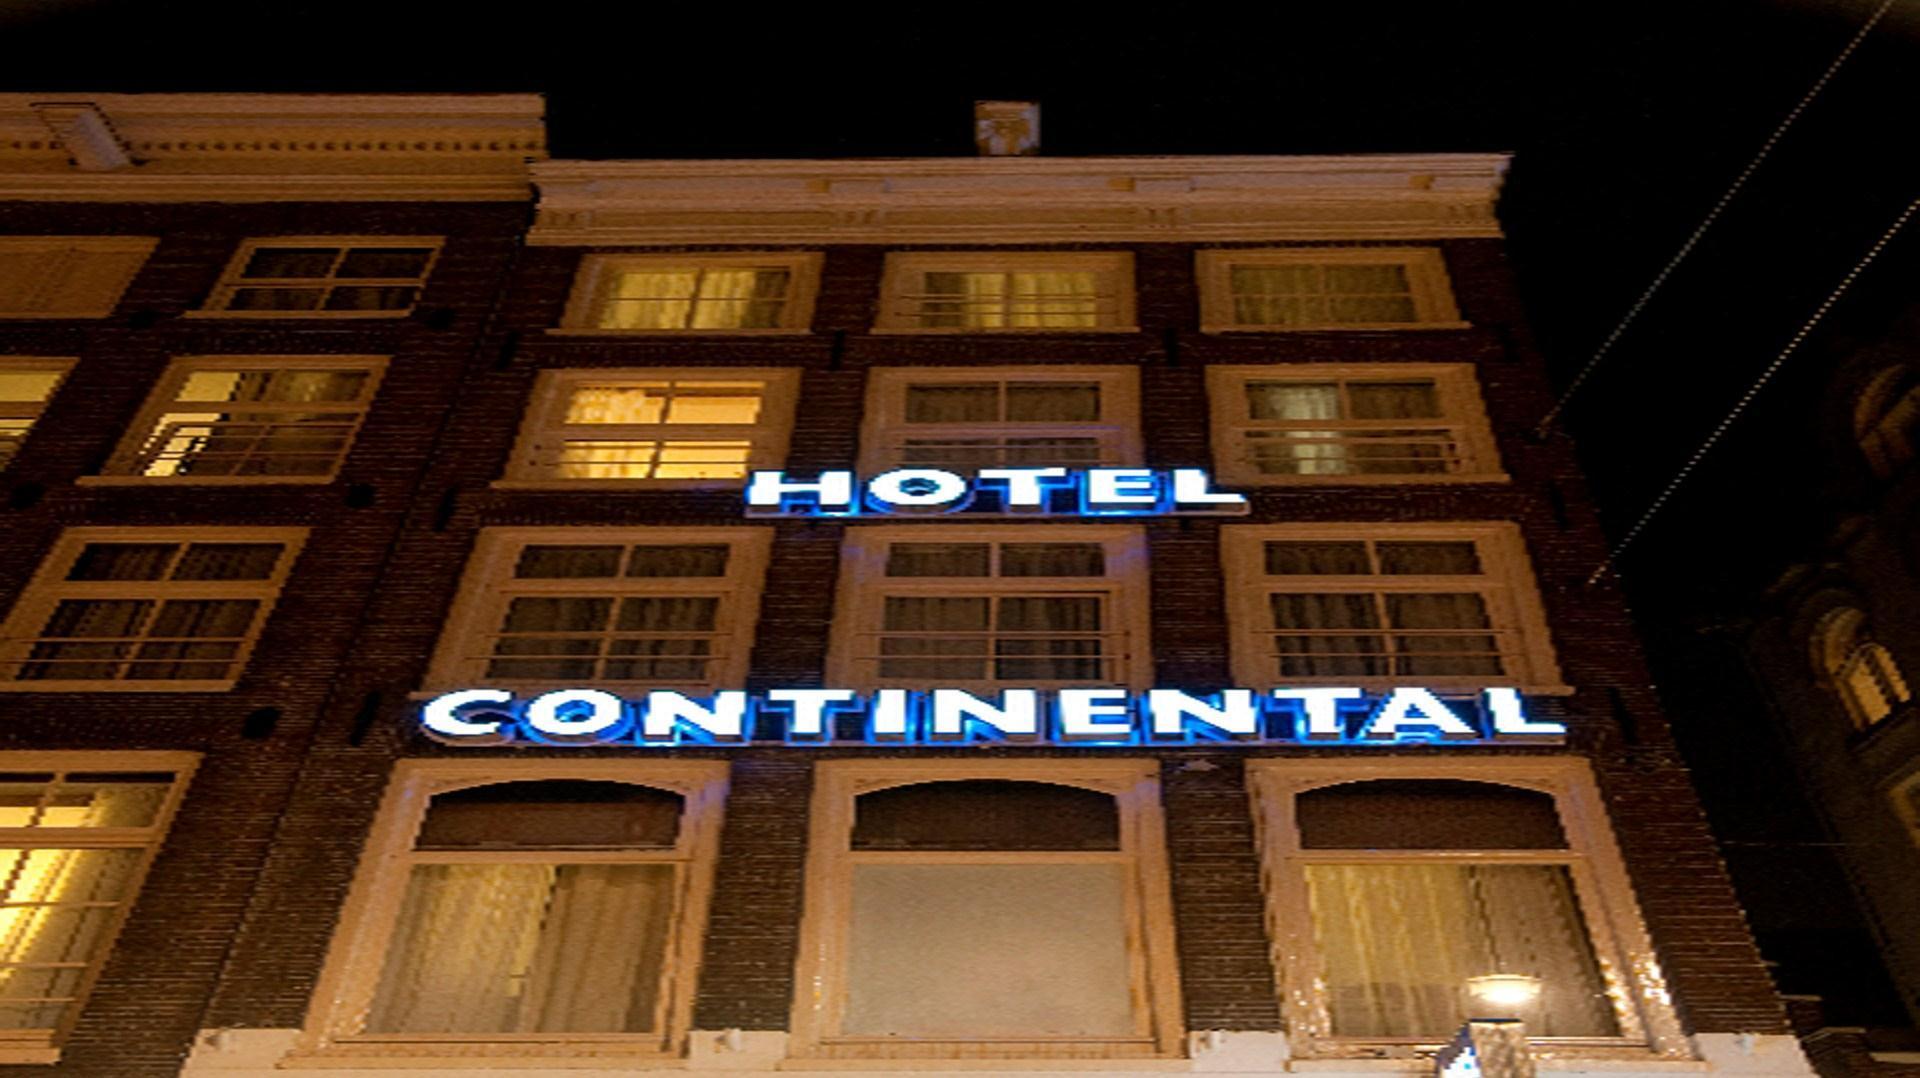 Hotel Continental Amsterdam in Amsterdam, NL